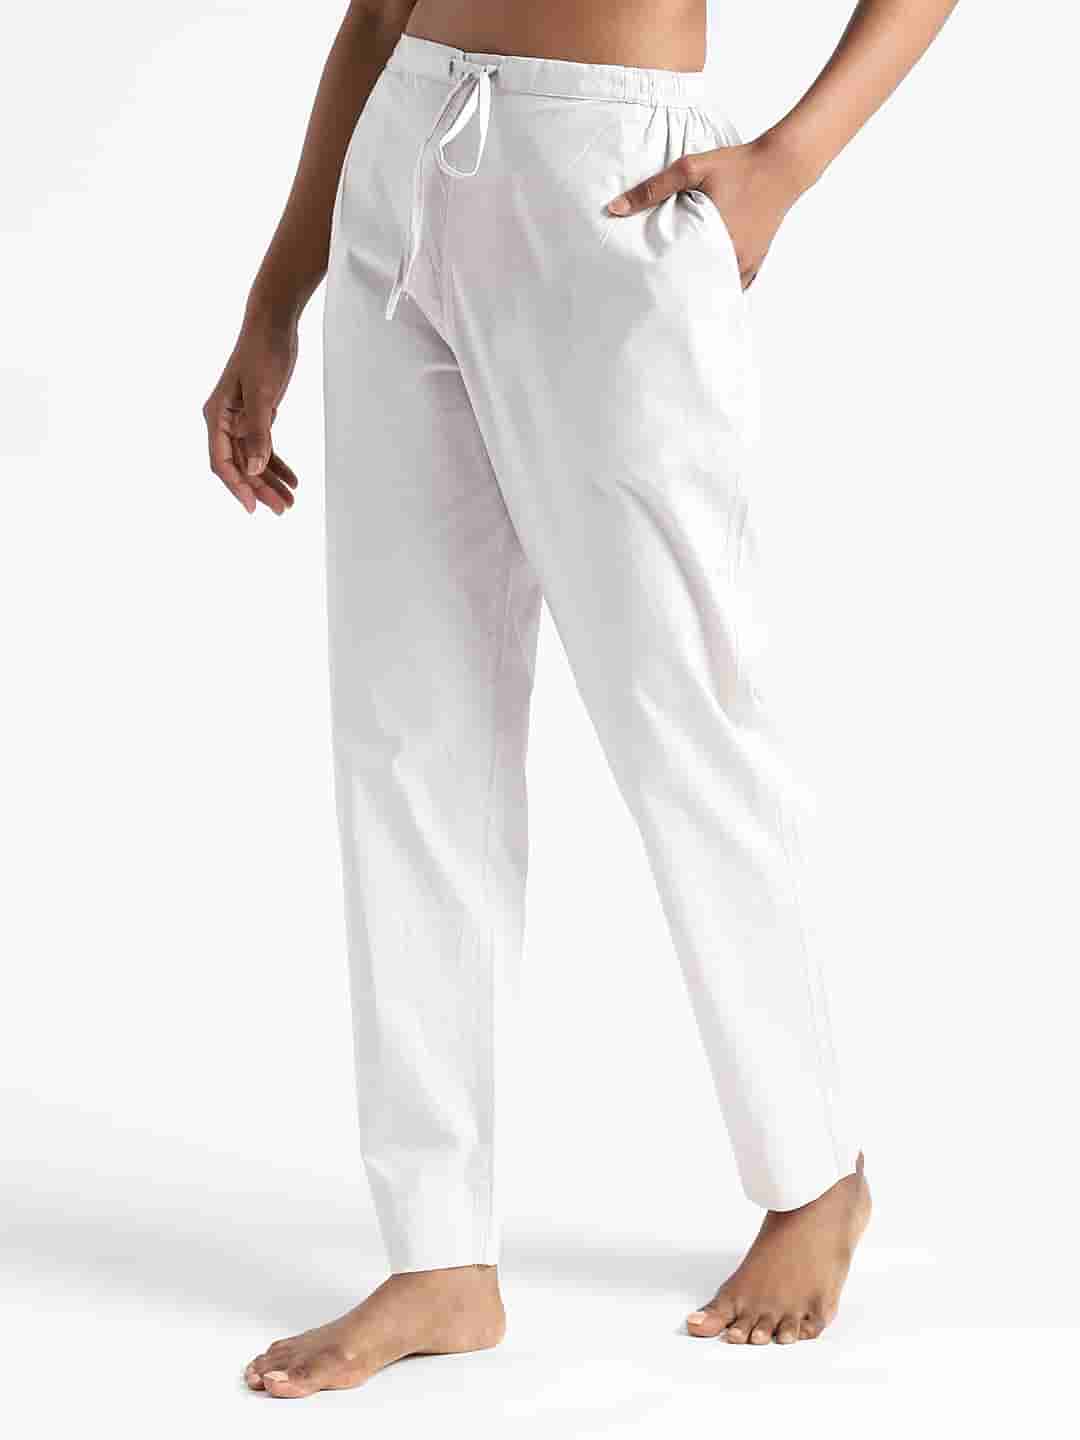 Organic Cotton & Natural Dyed Women’s Ash Grey Color Slim Fit Pants by Livbio